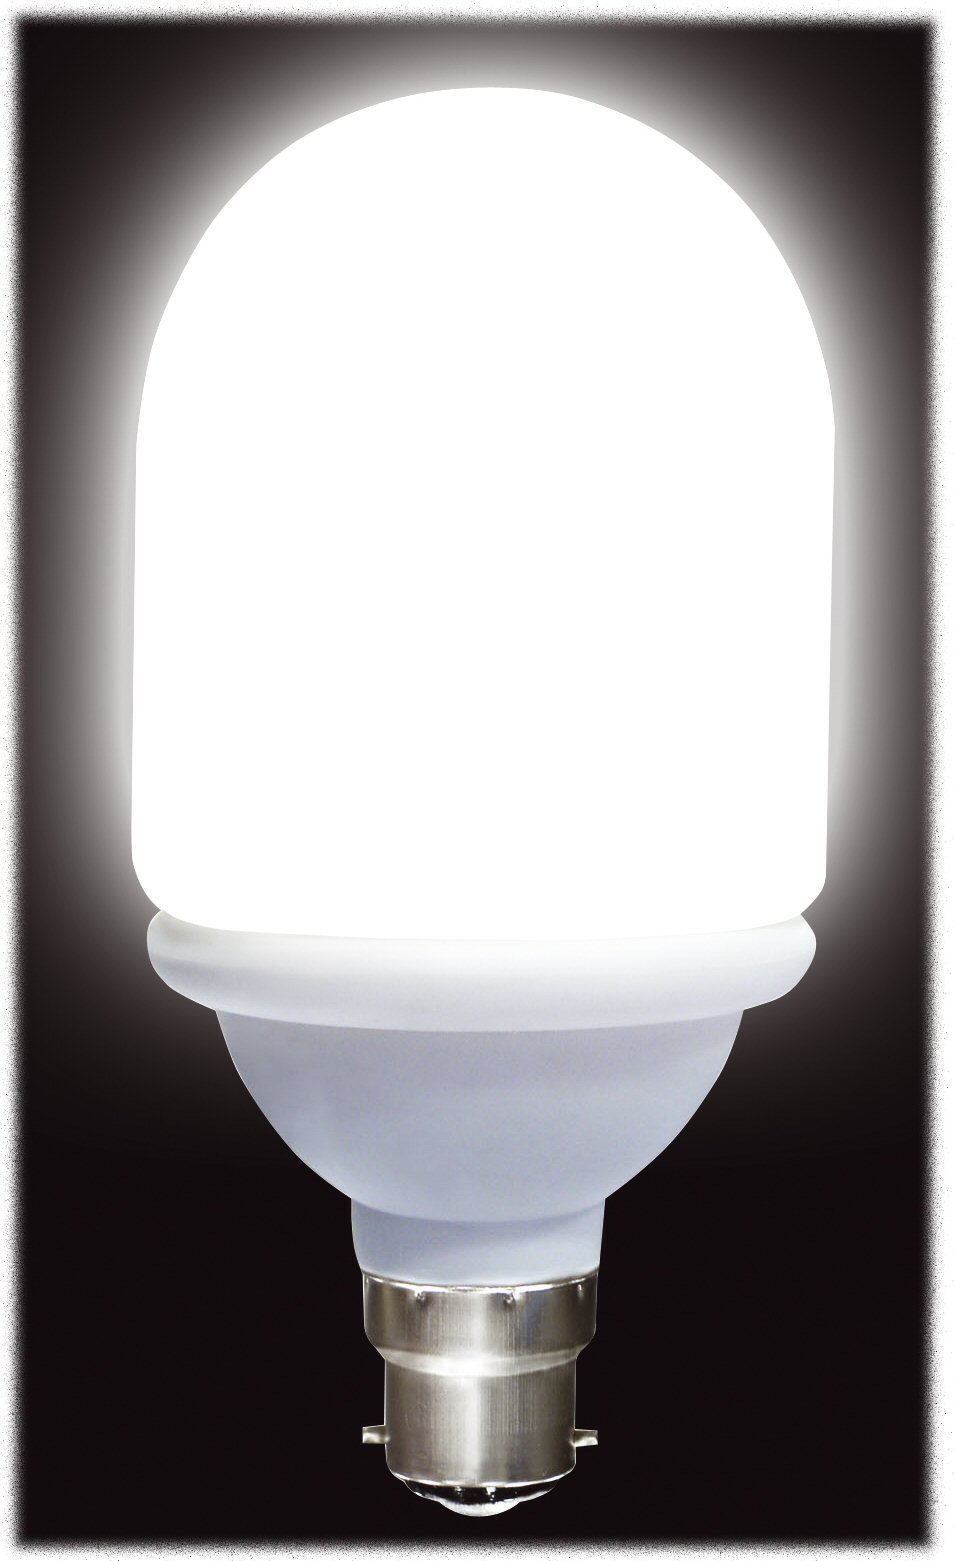 Unbranded Low Energy Daylight Bulbs 24W